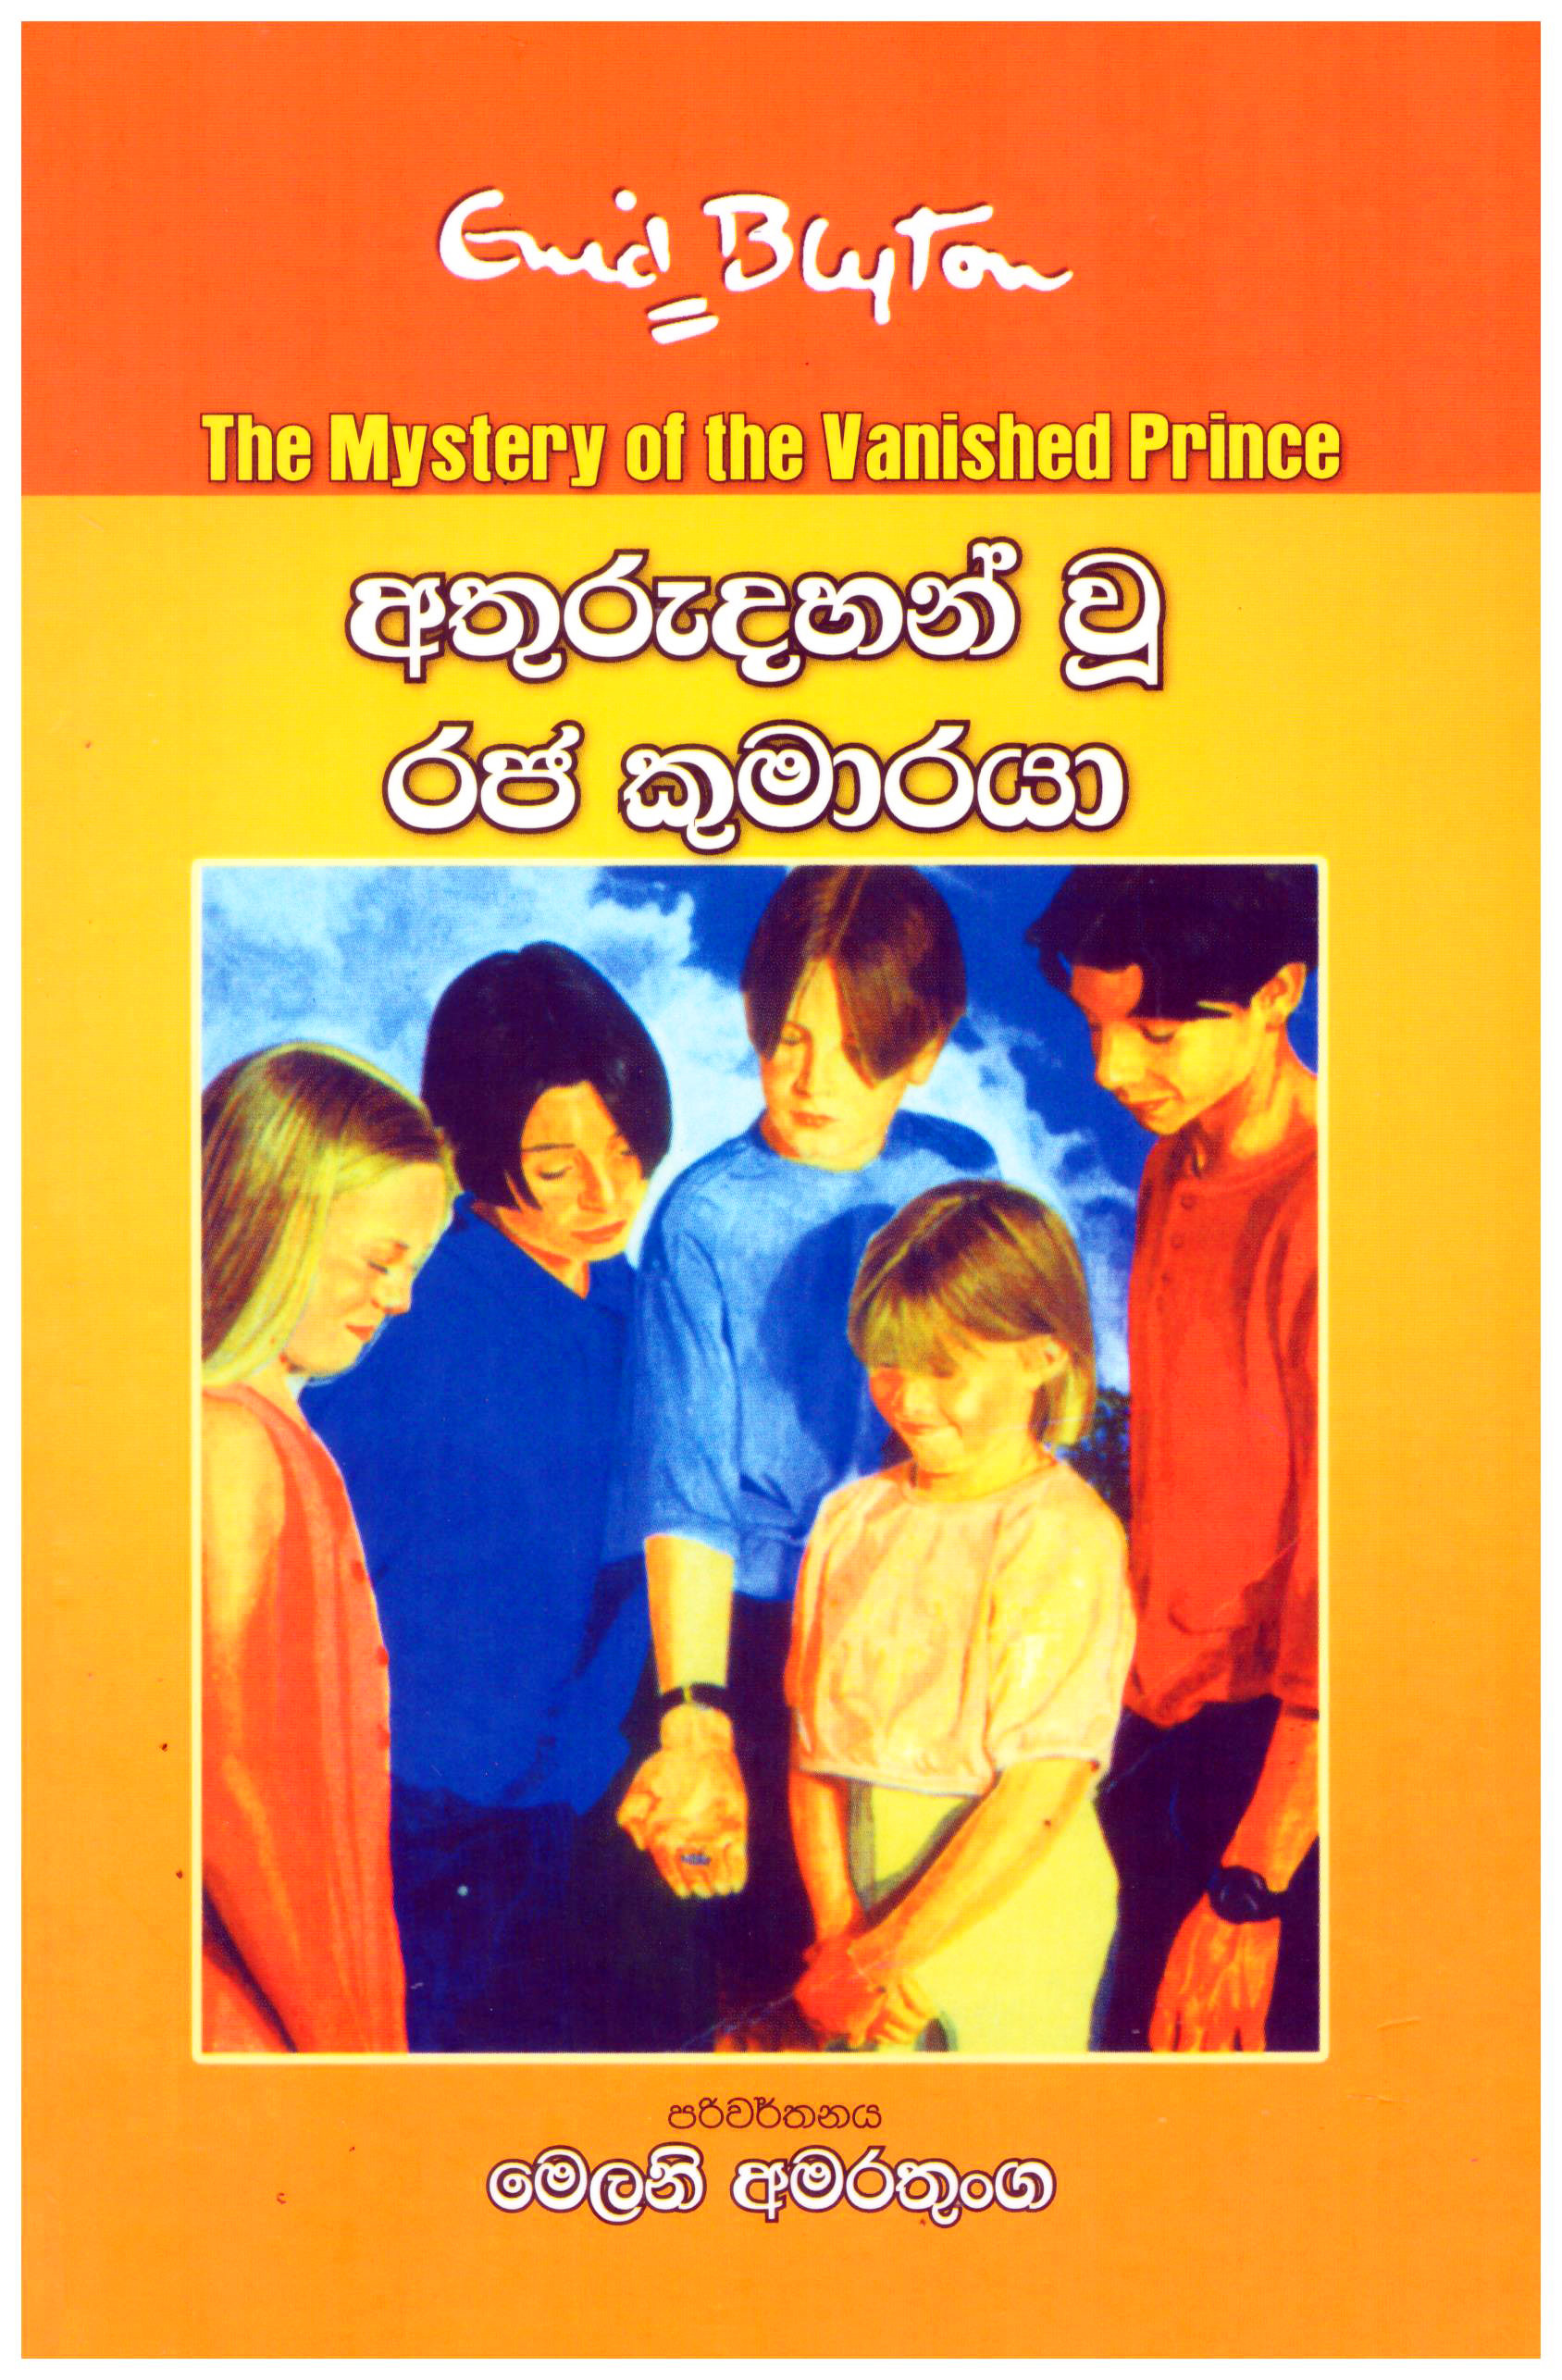 Athurudahan Wu Raja Kumaraya - Translations of The Mystery of the Vanished Prince by Enid Blyton